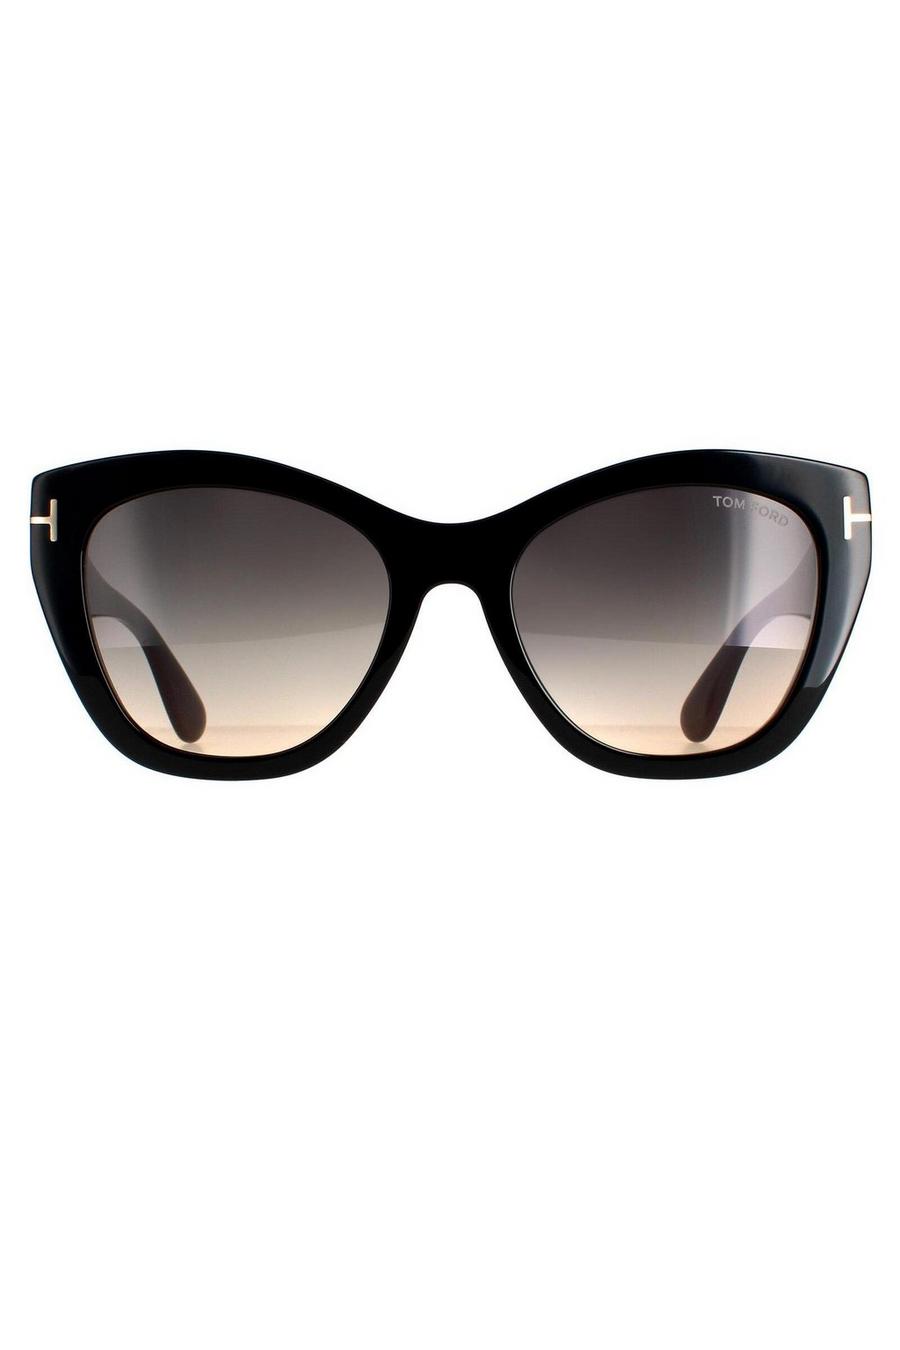 Cat Eye Shiny Black Smoke Grey Gradient FT0940 Cara Sunglasses image number 1